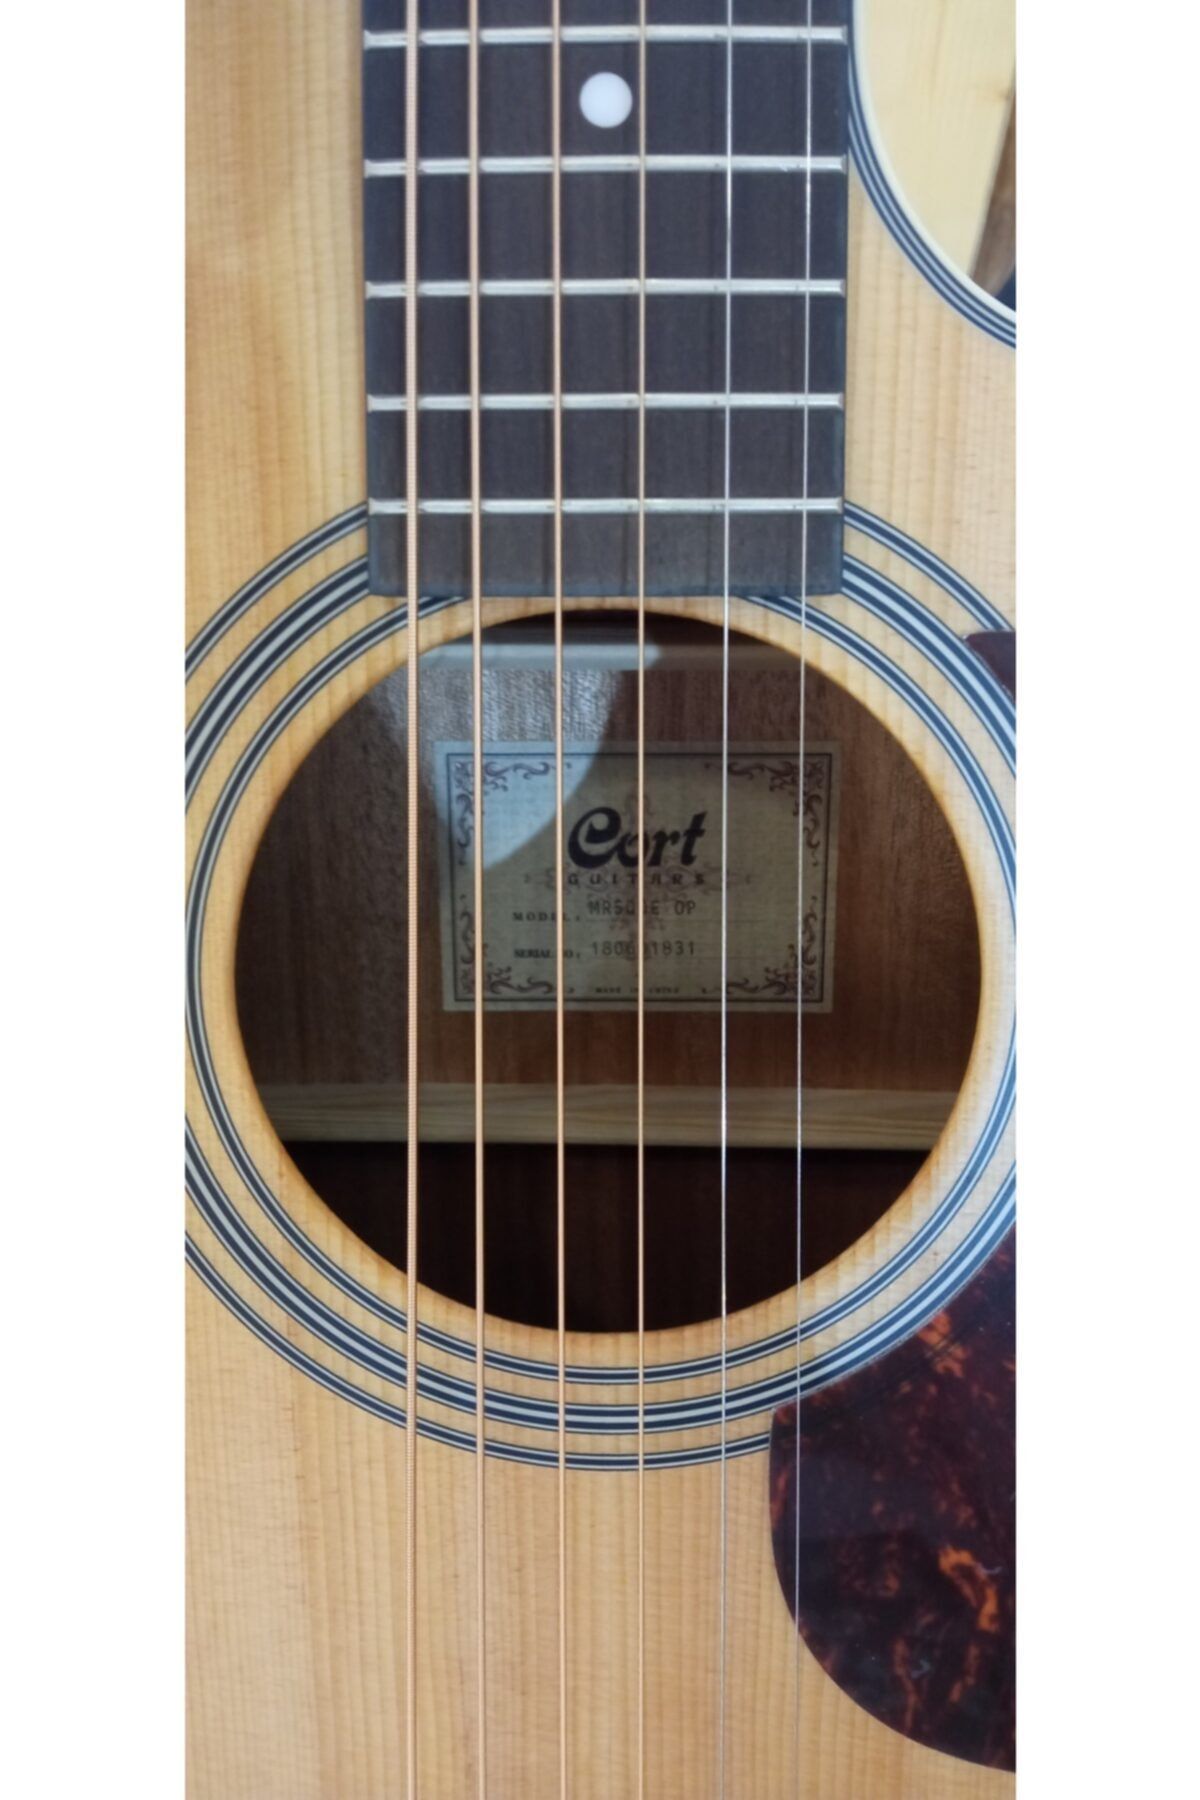 ARDIÇ MÜZİK MARKET Cort Mr500e-op Elektro Akustik Gitar